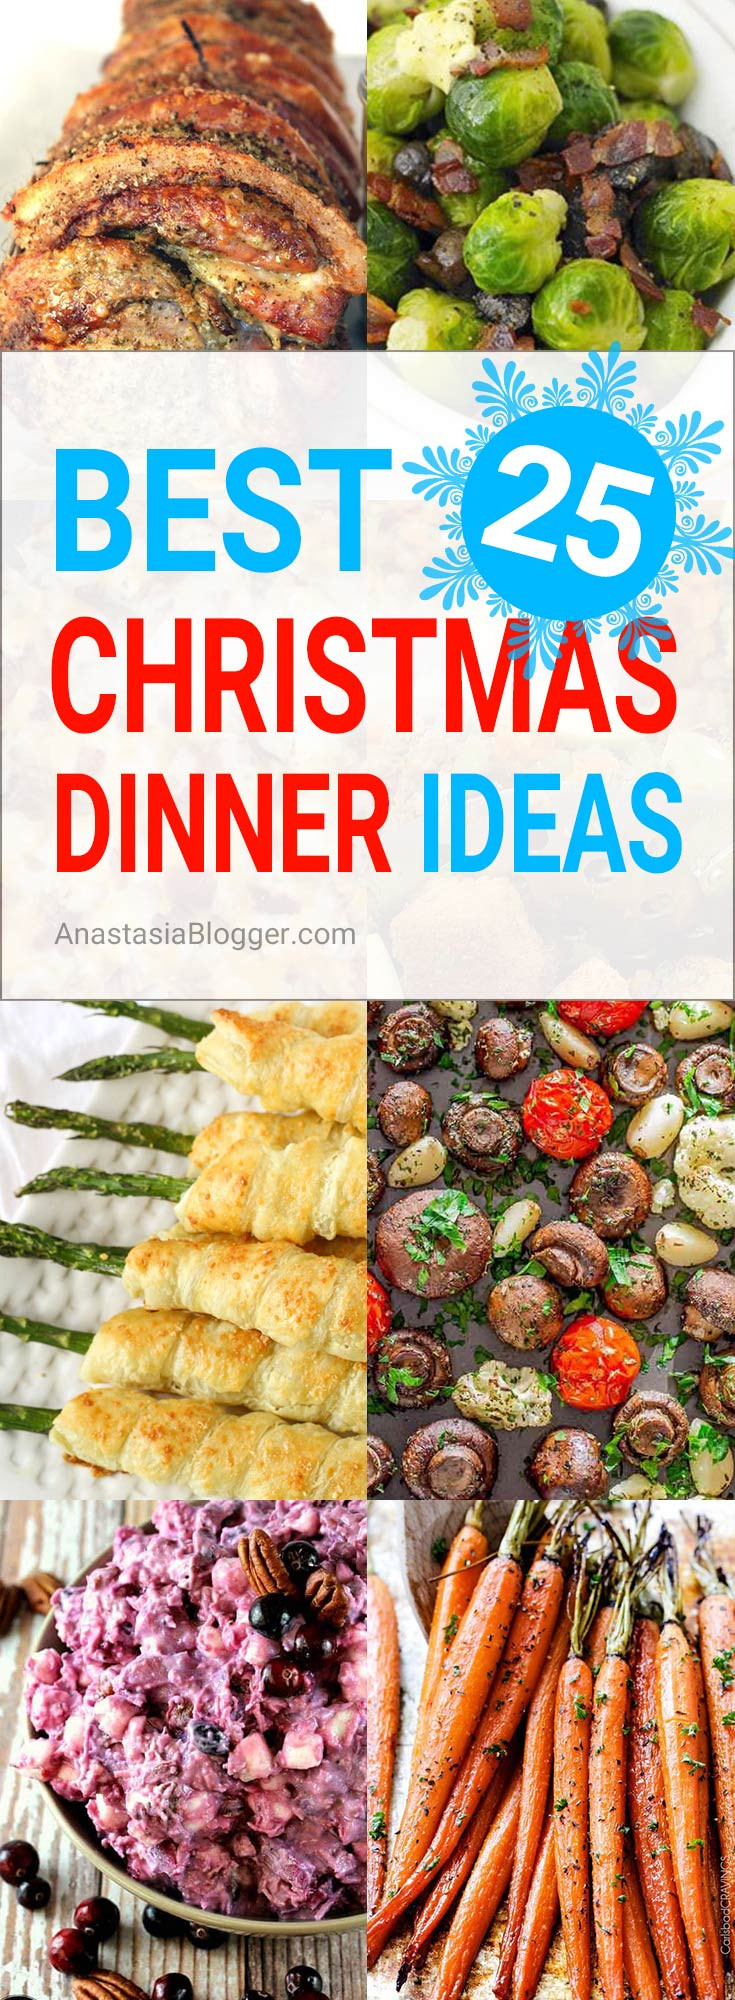 Italian Dinner Menu Ideas
 Best 25 Christmas Dinner Ideas Traditional Italian